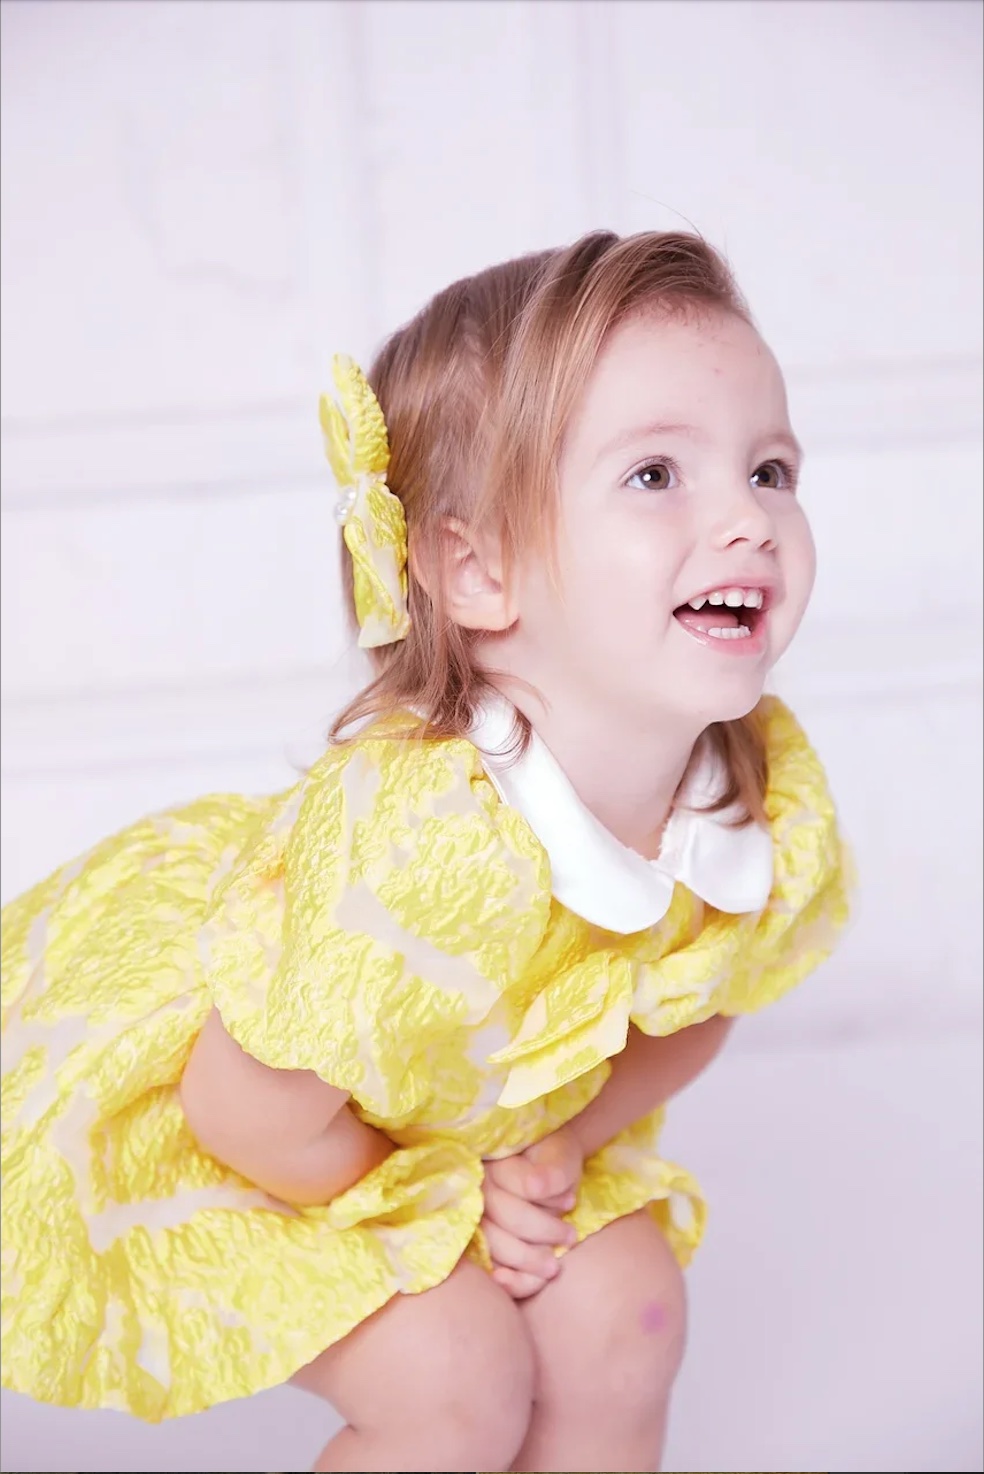 Baby Yellow with White Collar Brocade Baby Dress